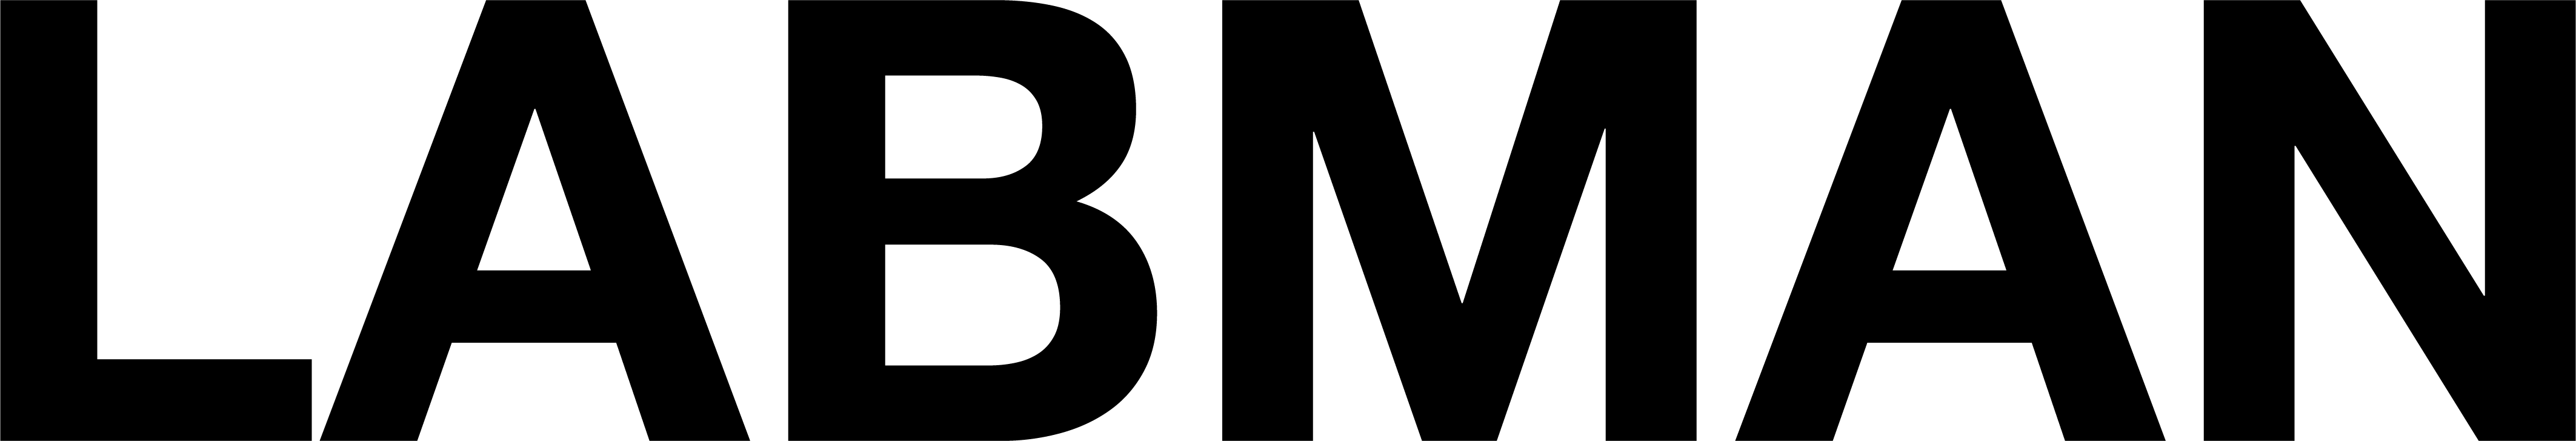 Labman Black Logo